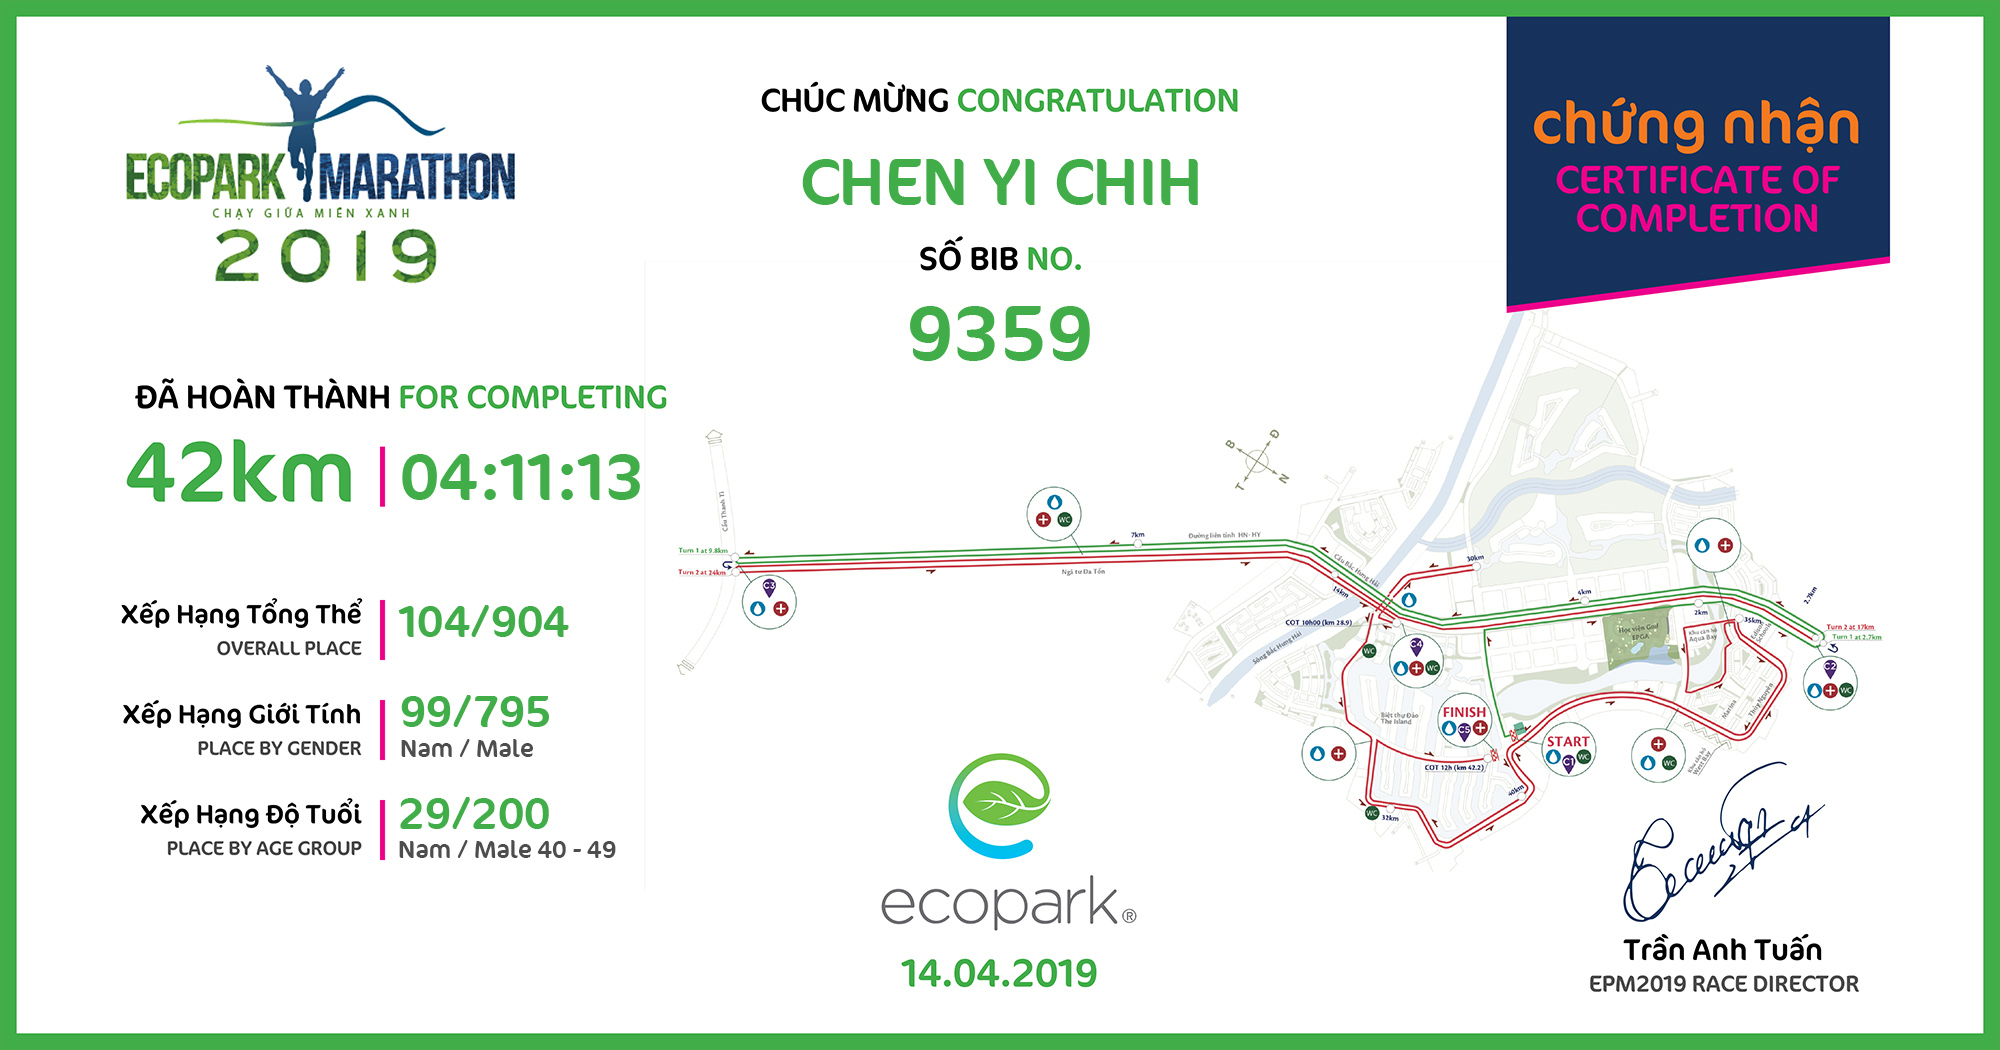 9359 - Chen Yi Chih